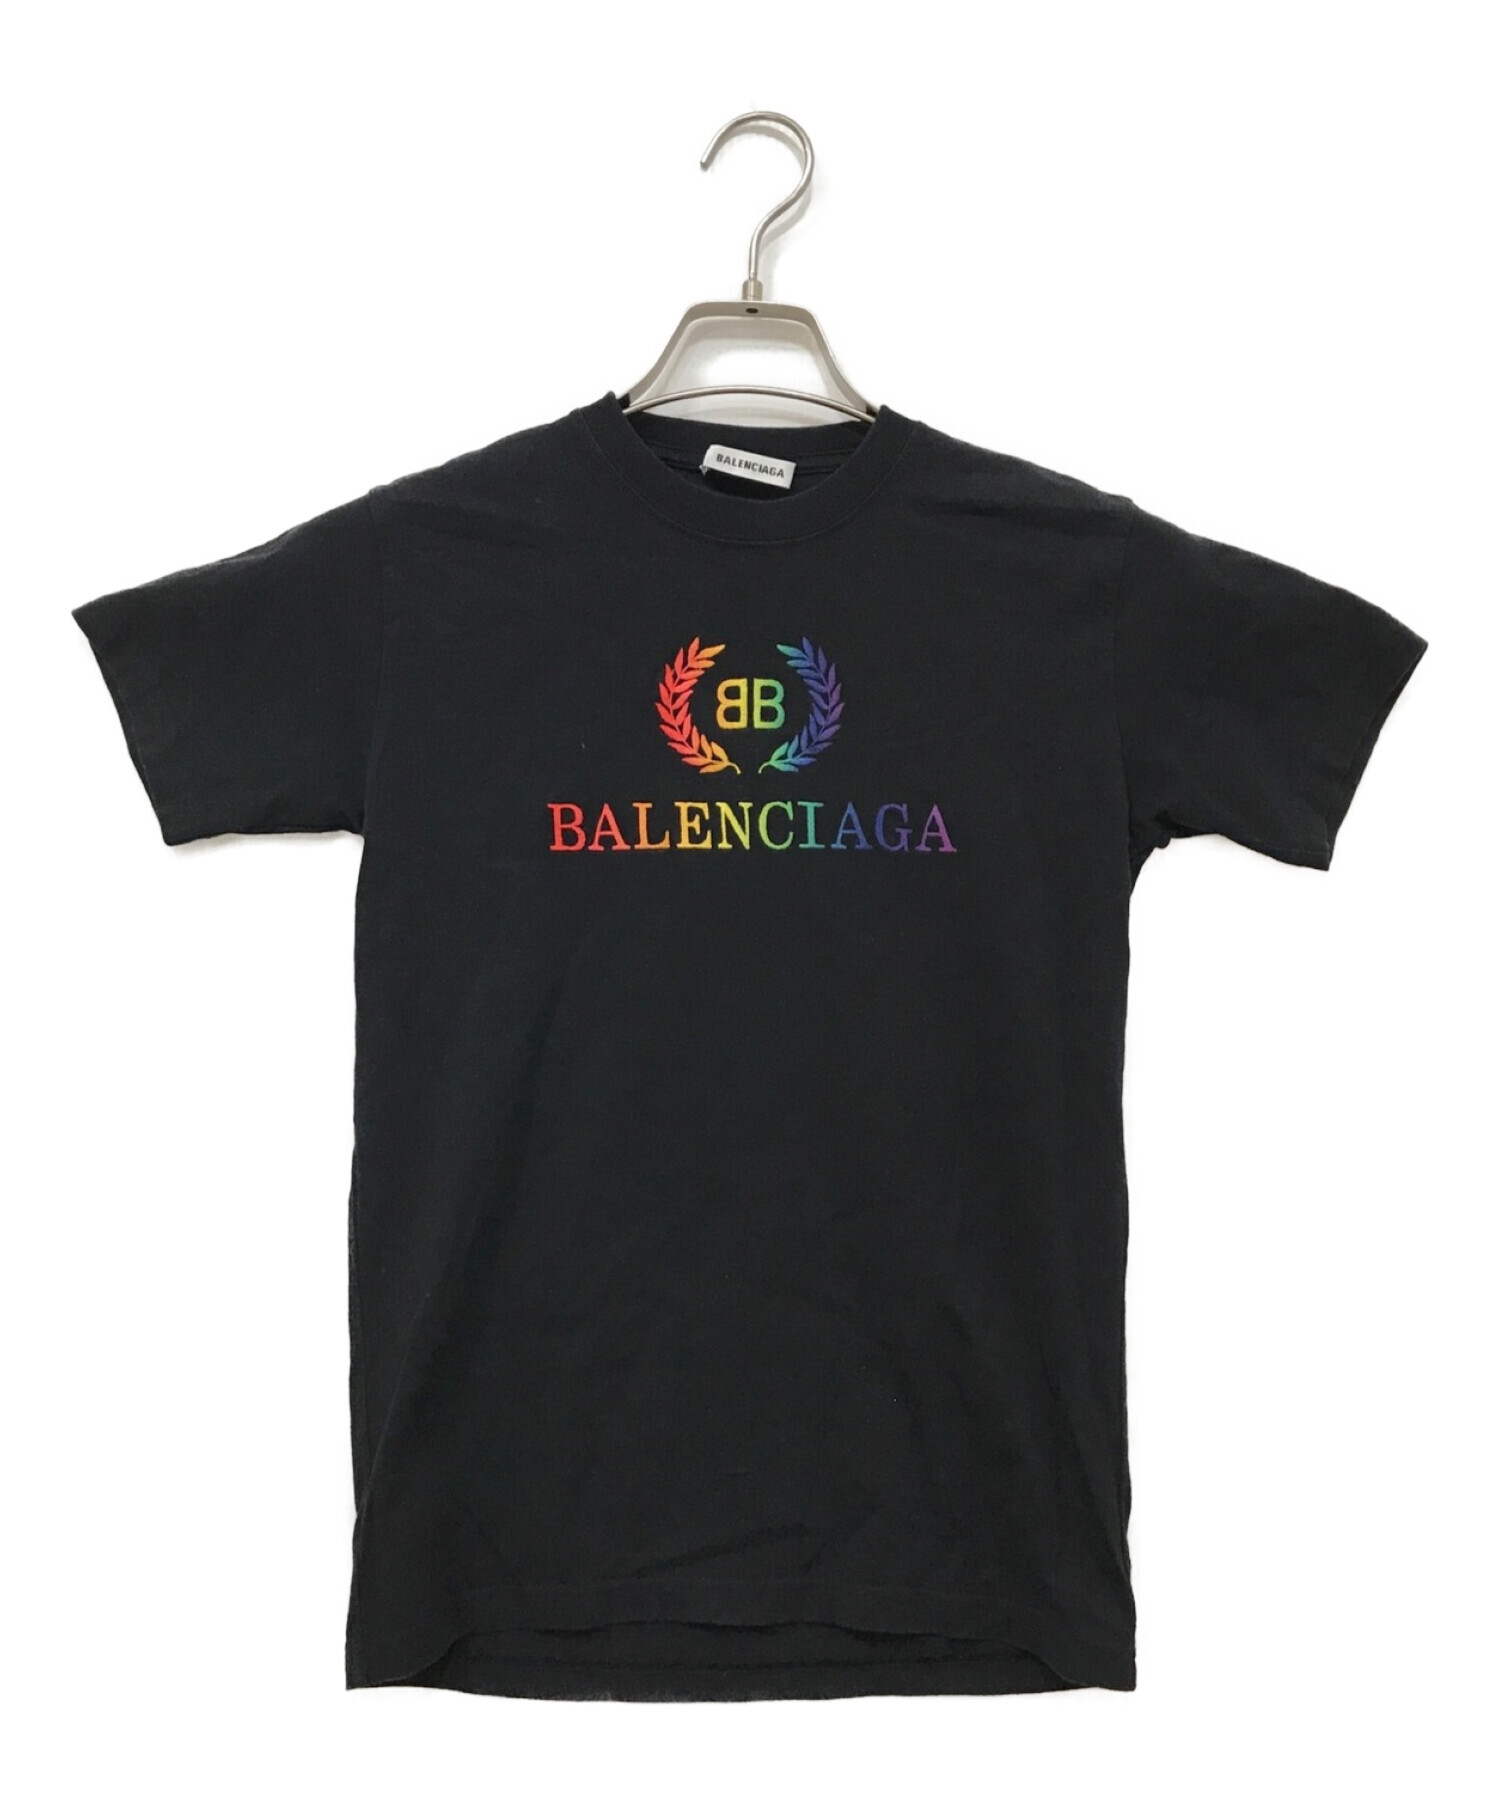 BALENCIAGA (バレンシアガ) レインボーロゴTシャツ ブラック サイズ:XS